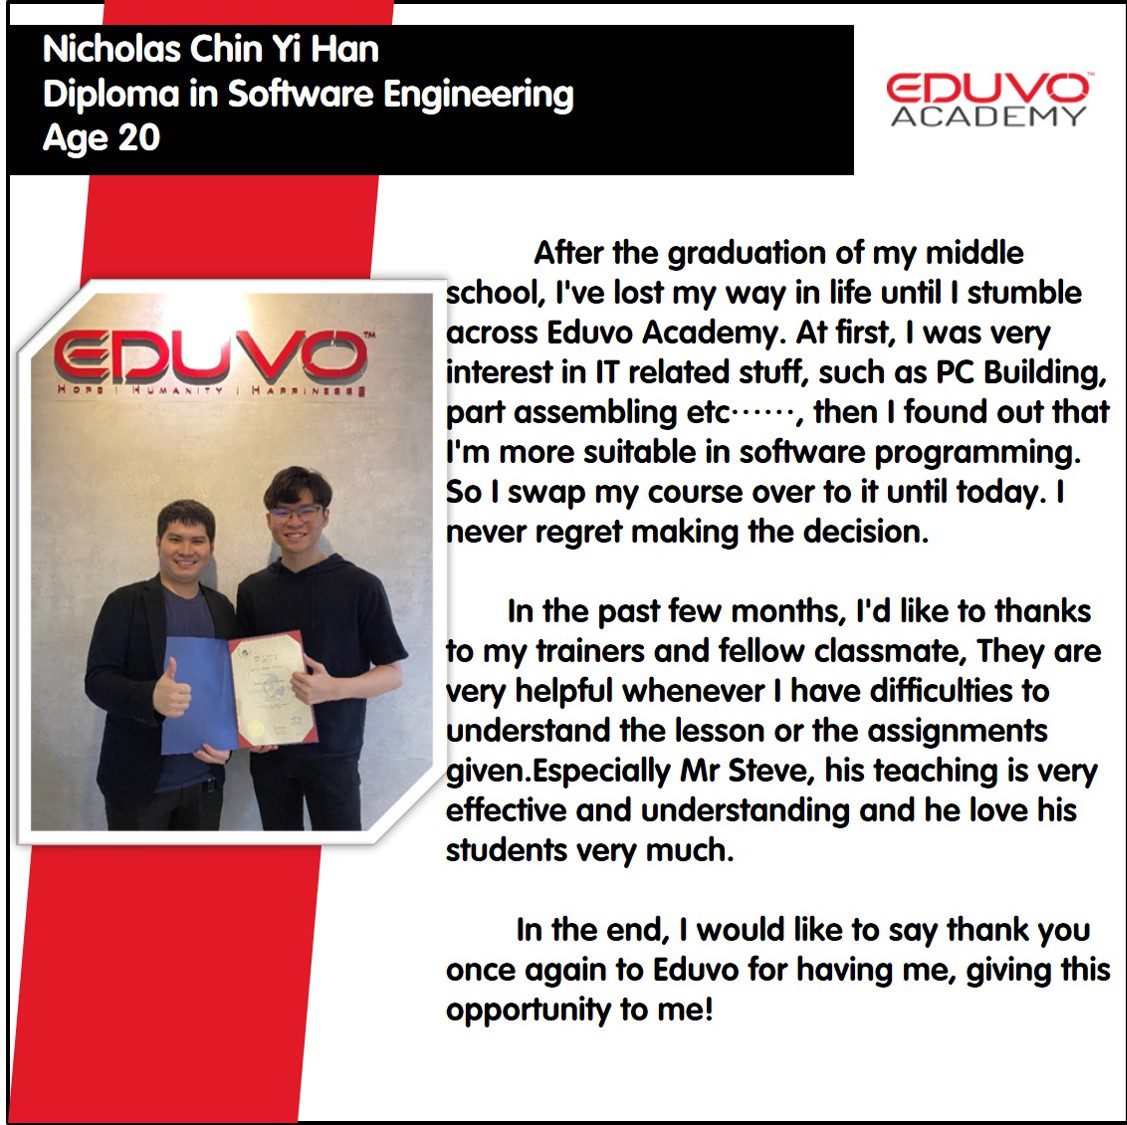 Diploma in Software Engineering - Nicholas Chin Yi Han